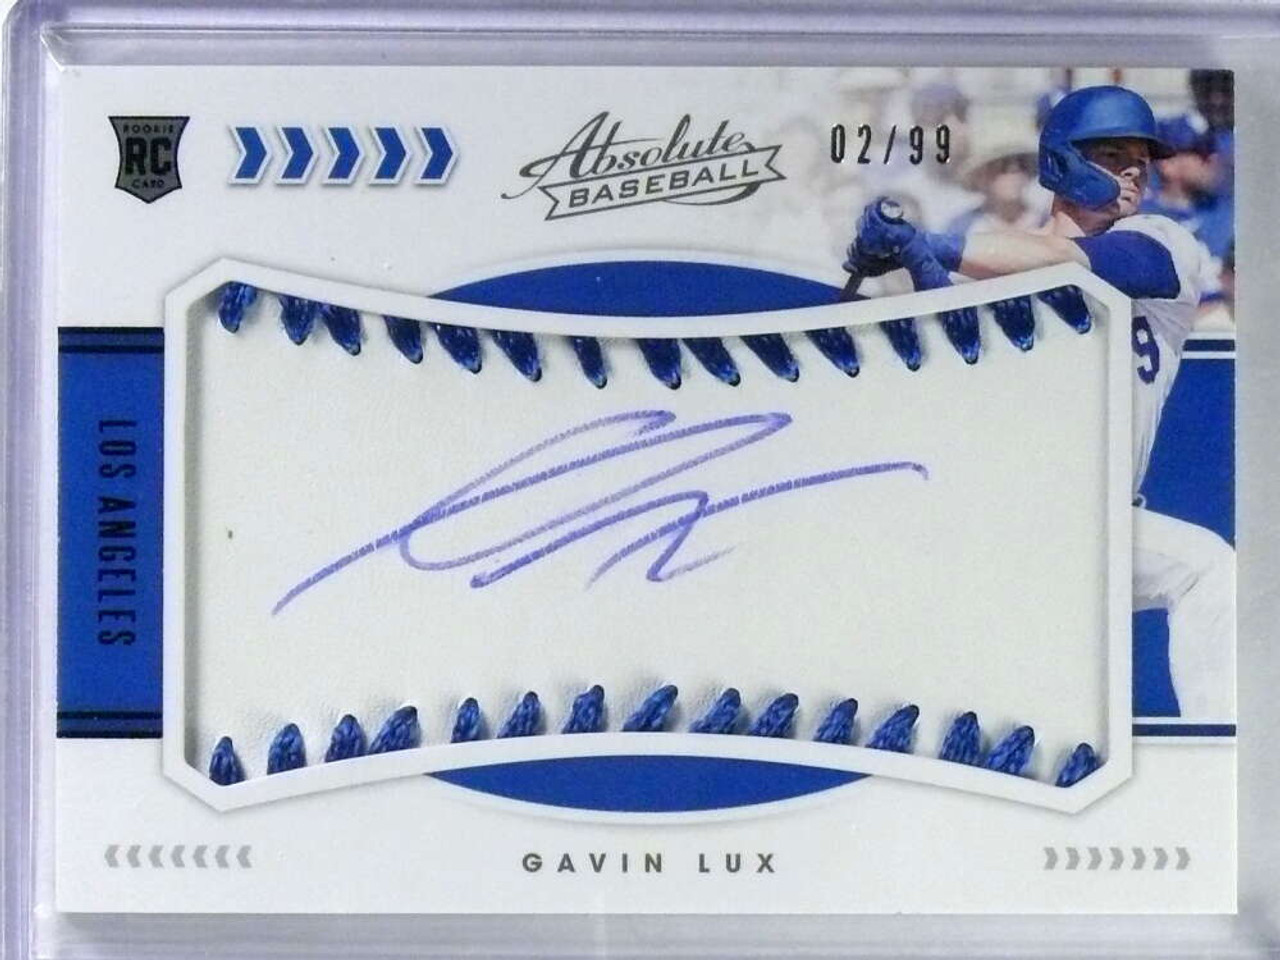 2020 Panini Absolute Baseball Gavin Lux autograph auto rc rookie #D02/99  *80865